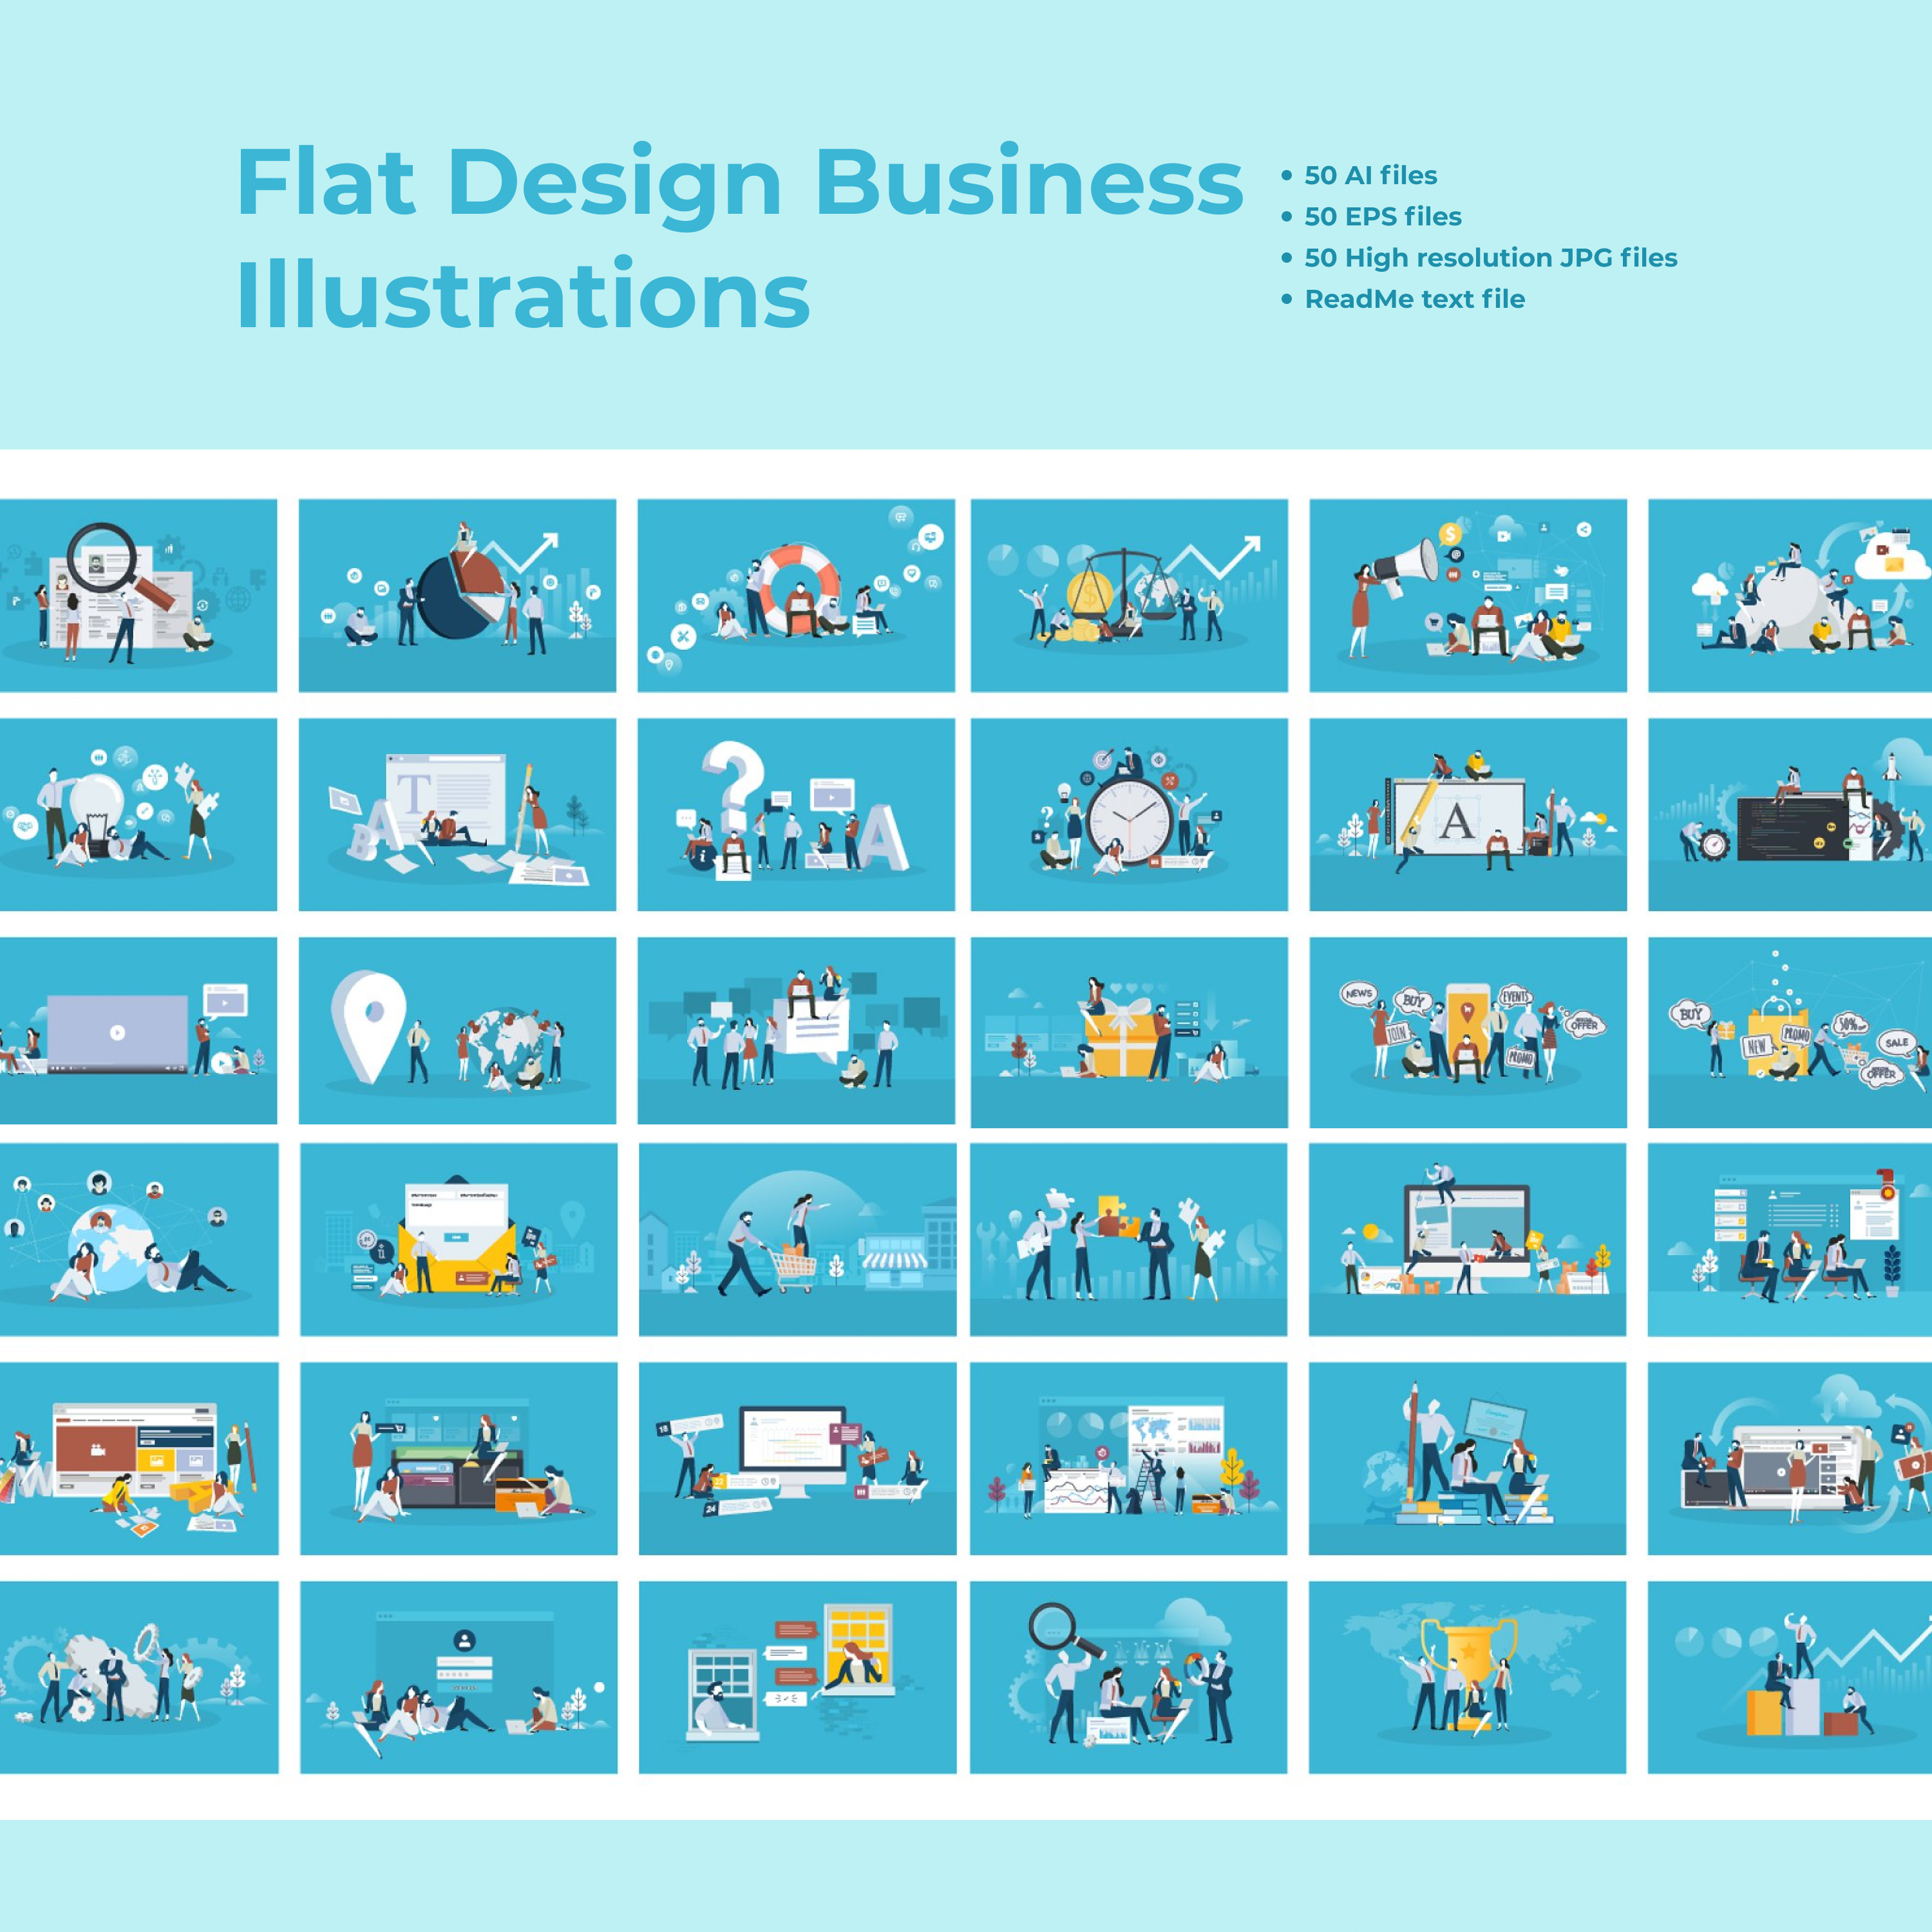 Flat design business illustrations.